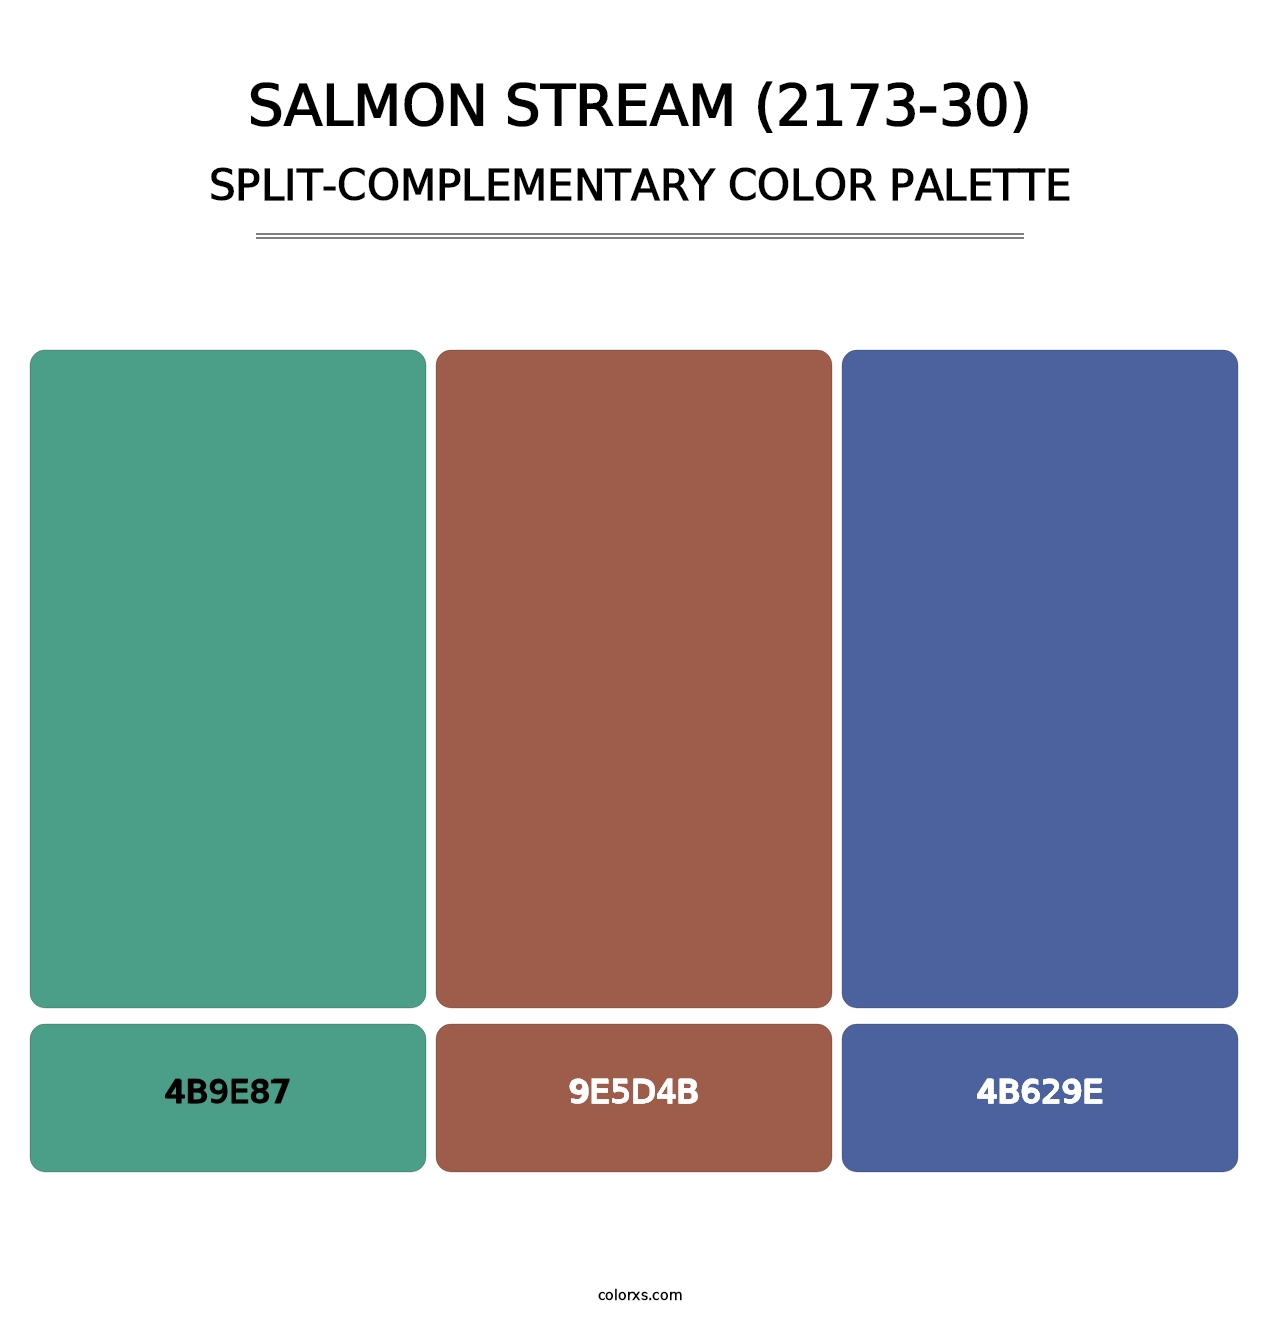 Salmon Stream (2173-30) - Split-Complementary Color Palette